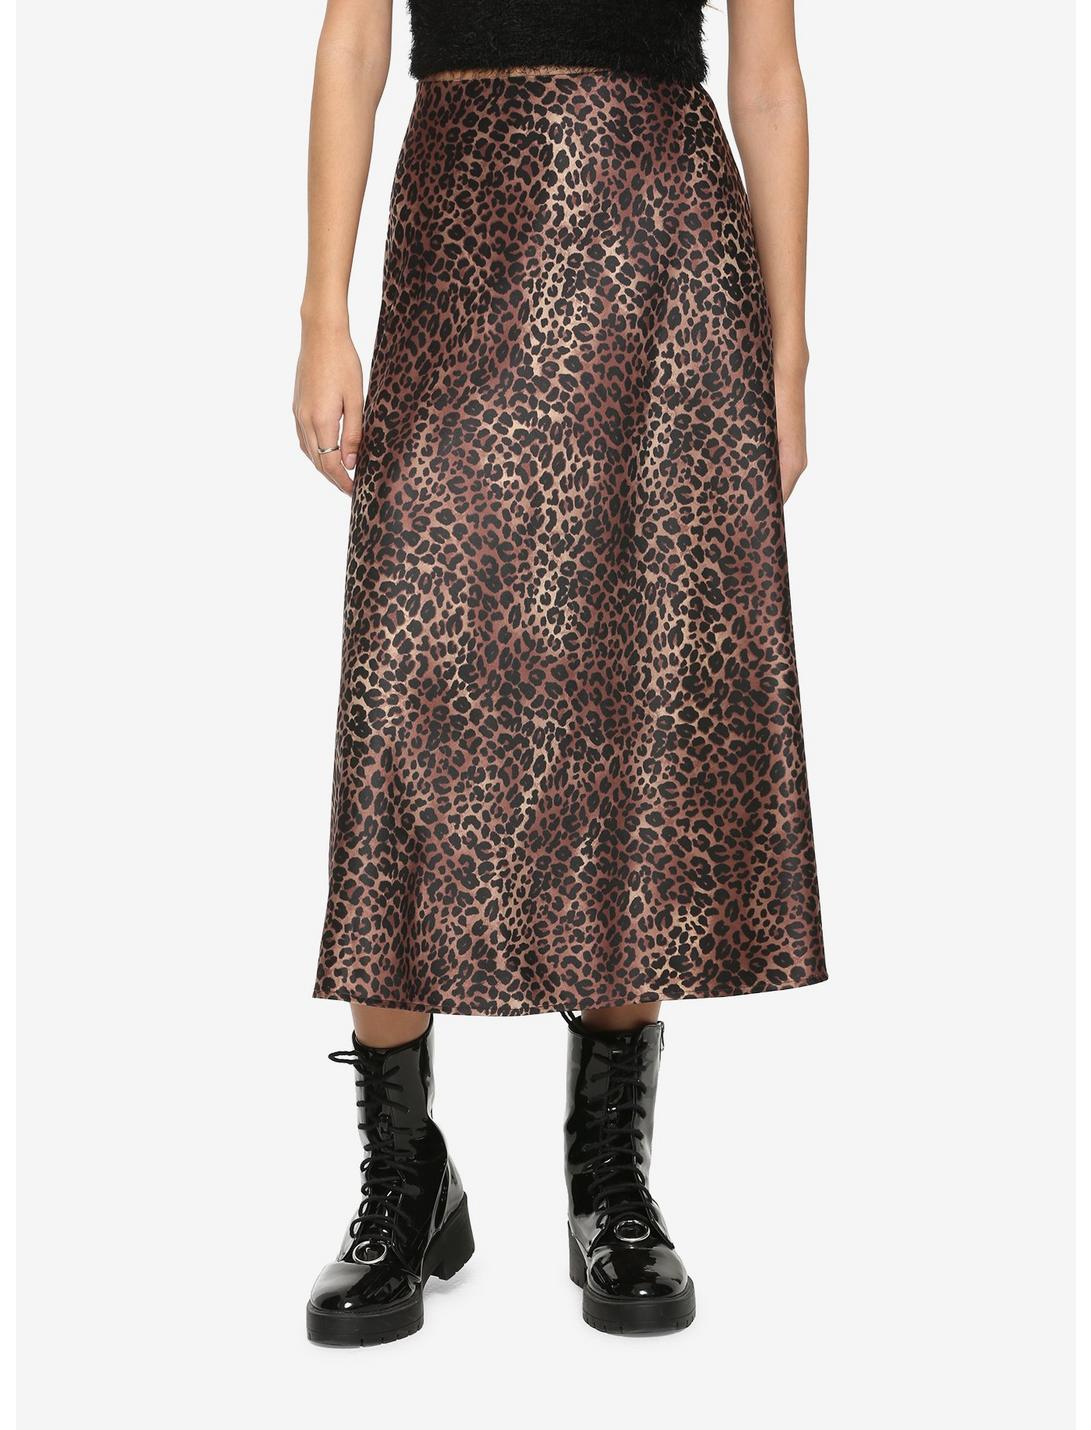 Leopard Print Midi Skirt, LEOPARD, hi-res